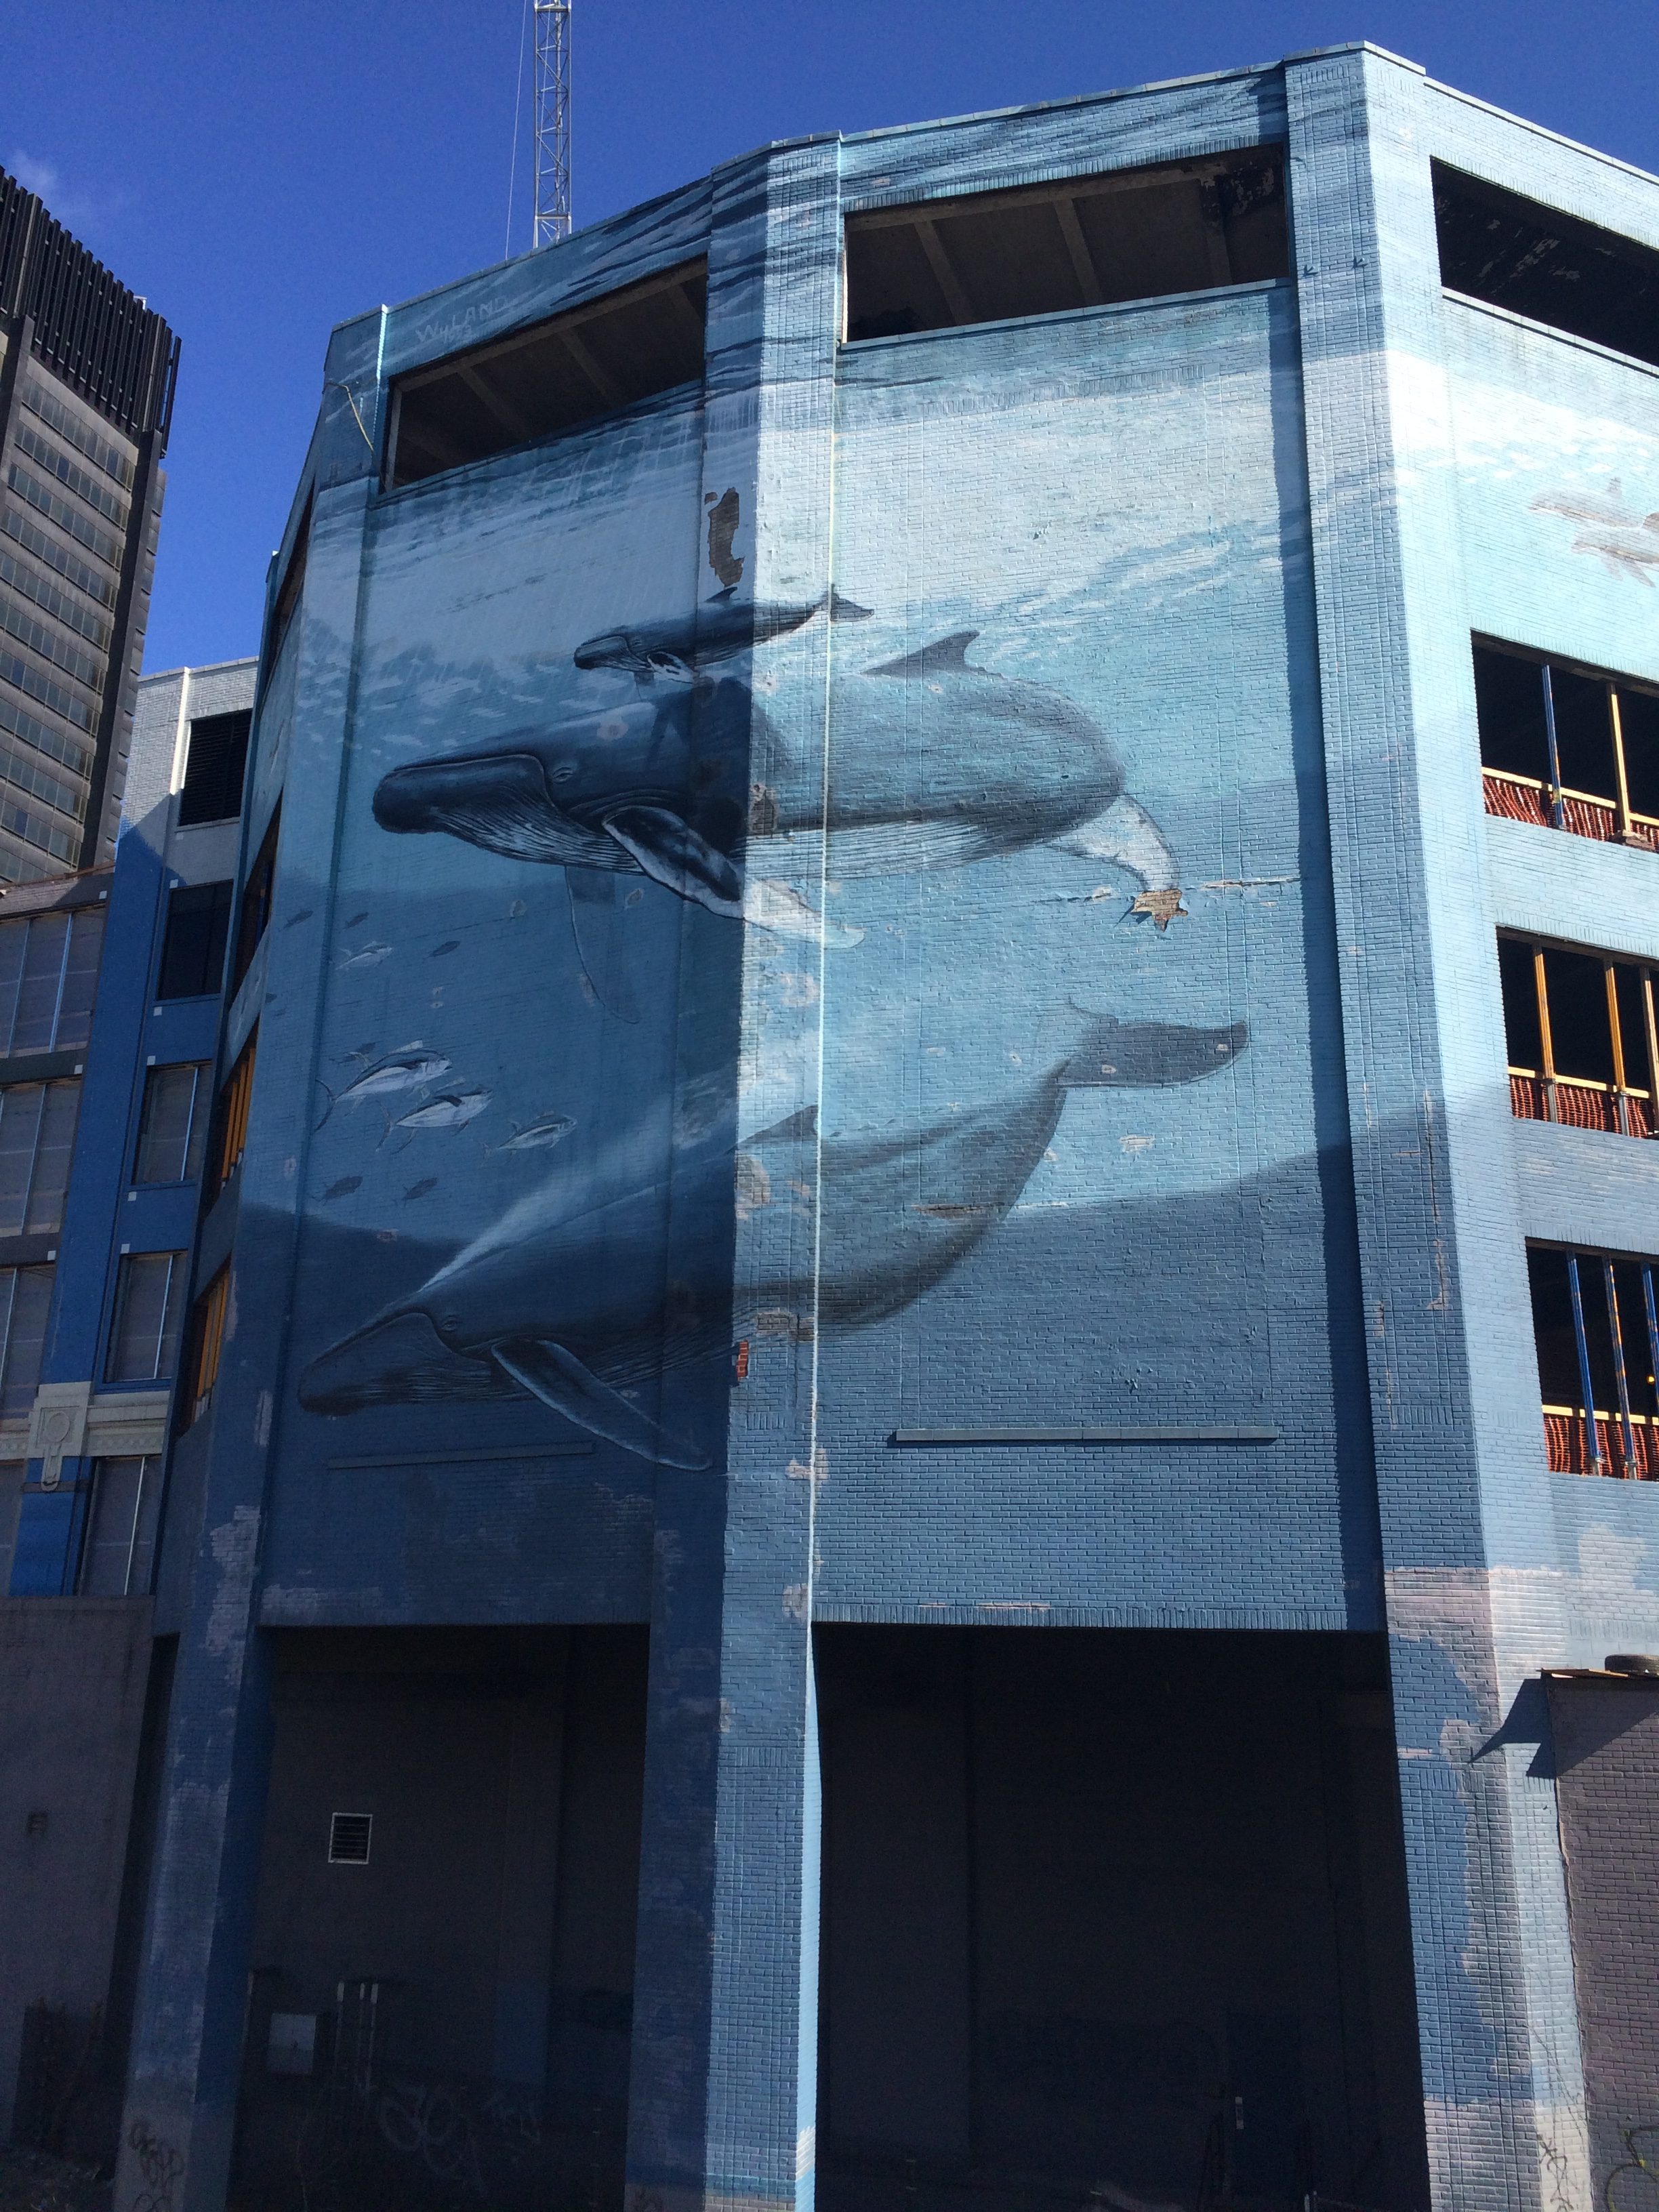 Whaling Wall #42 “East Coast Humpbacks”